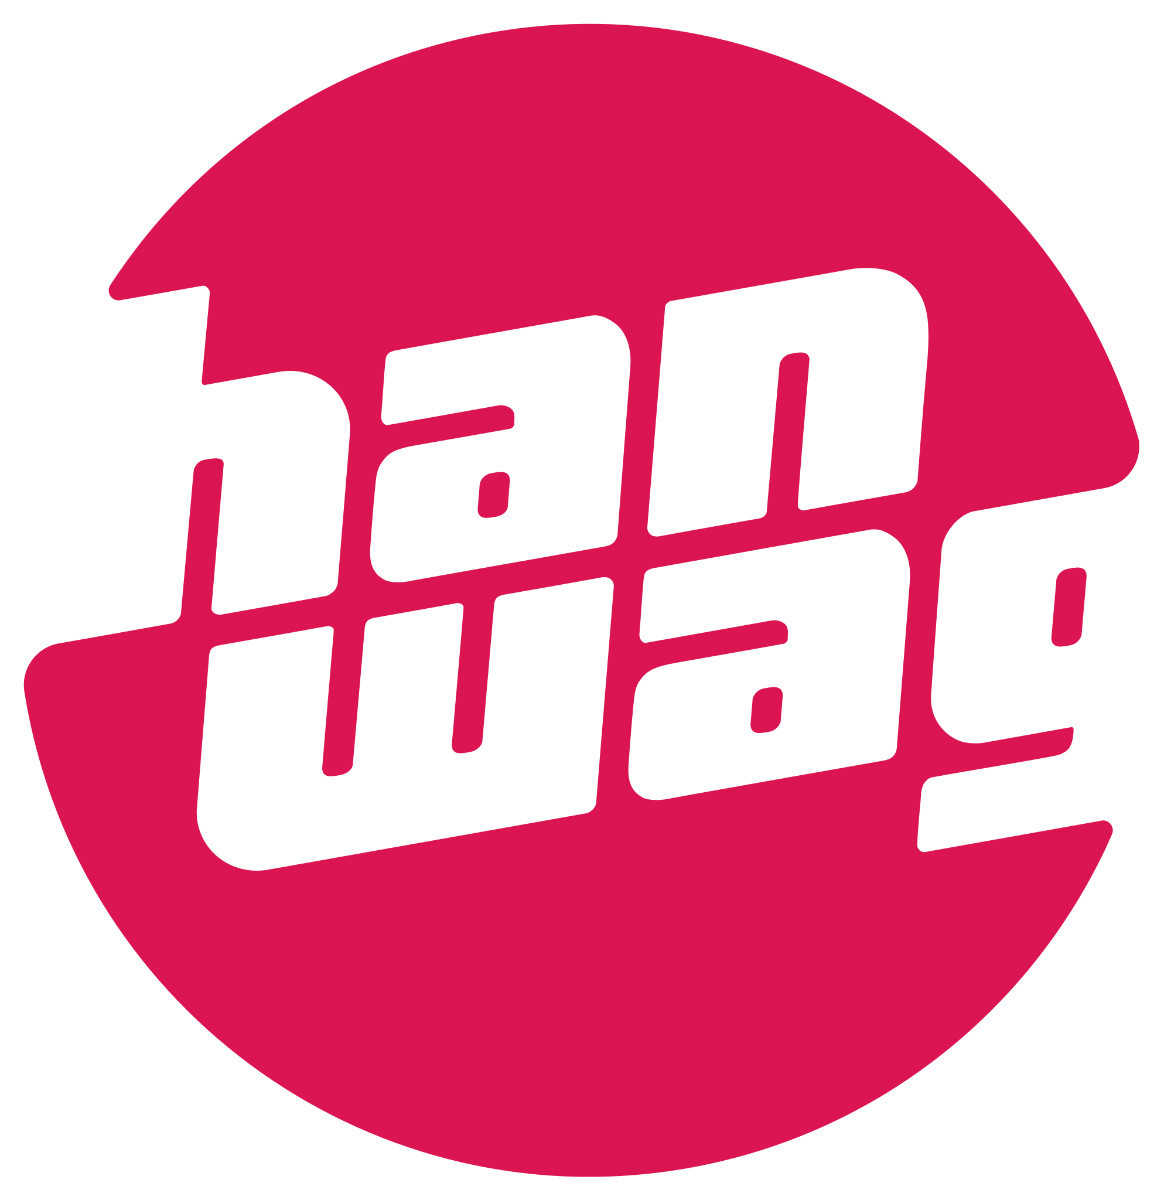 Hanwag (depuis 1921)